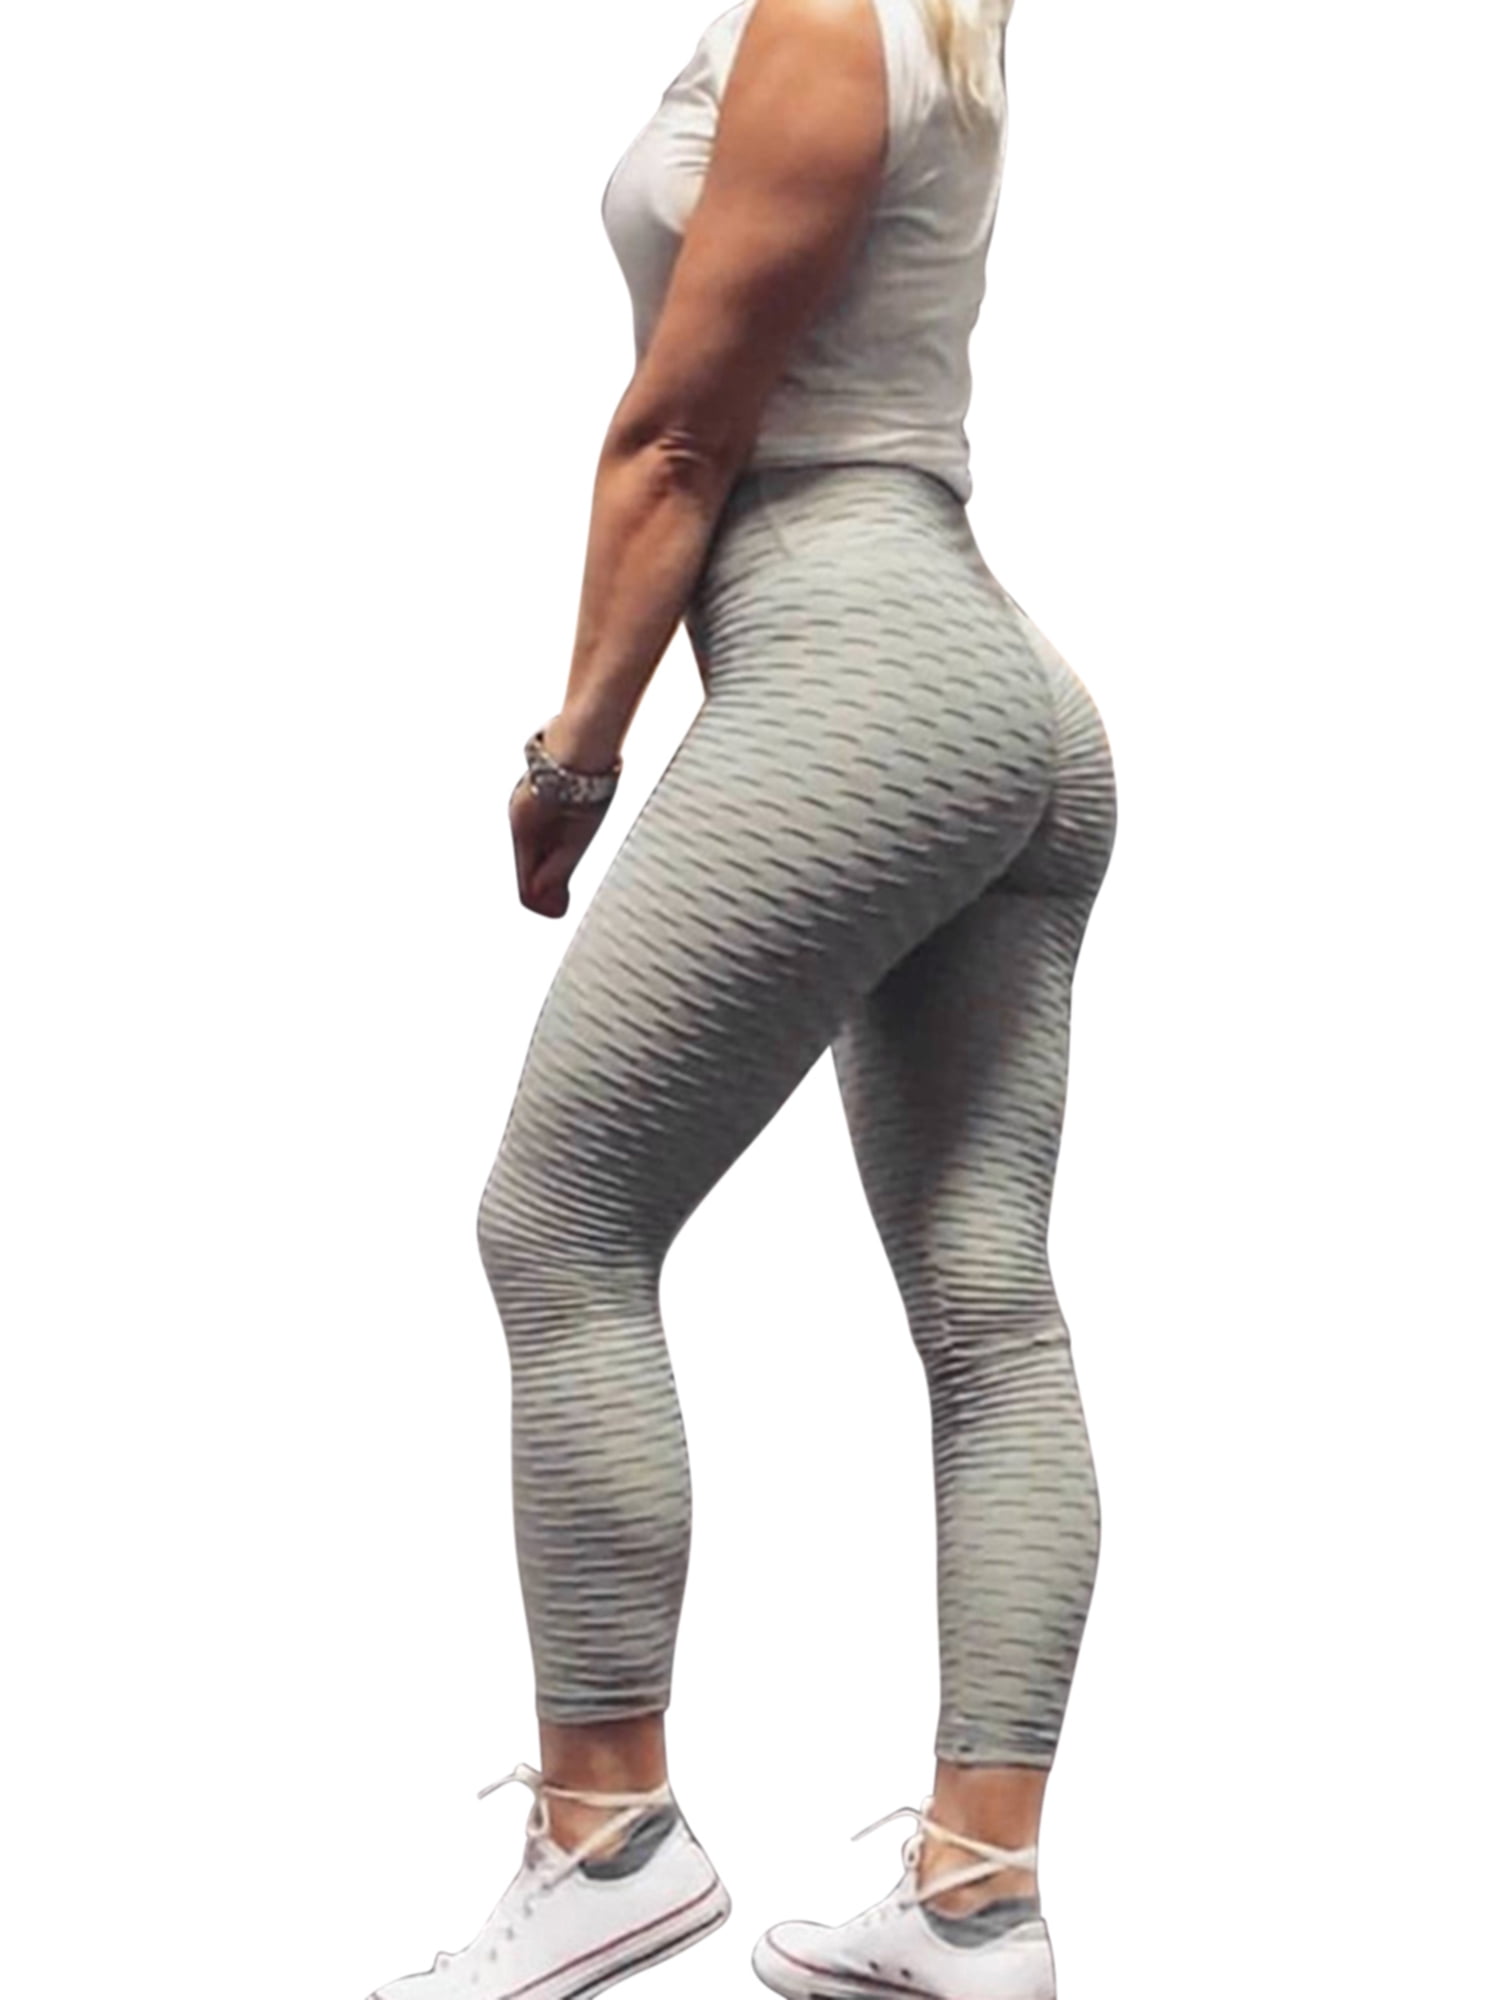 JYYYBF Women's High Waist Yoga Pants Tummy Control Slimming Booty Leggings  Workout Running Butt Lift Tights Black S 